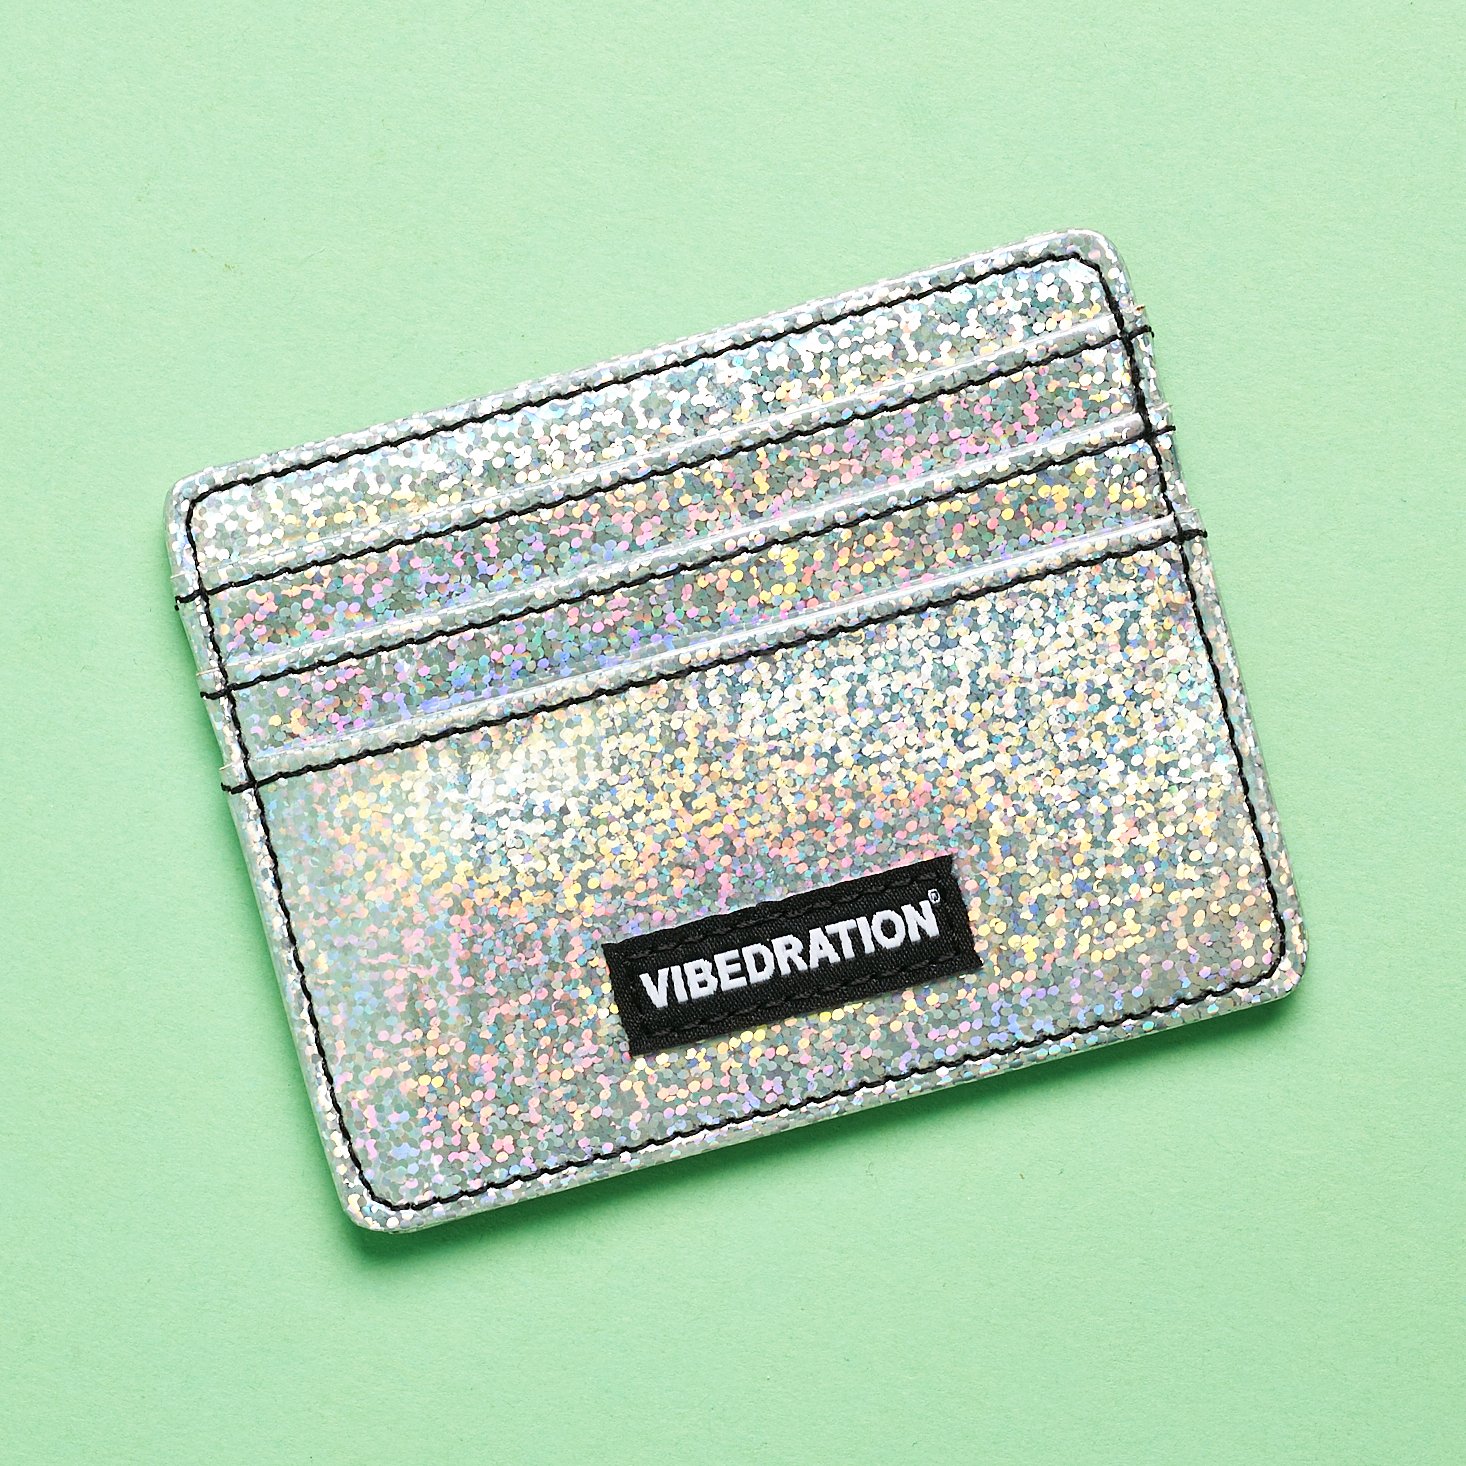 Festival Fashion Box February 2020 - vibedration holo card wallet showing back label